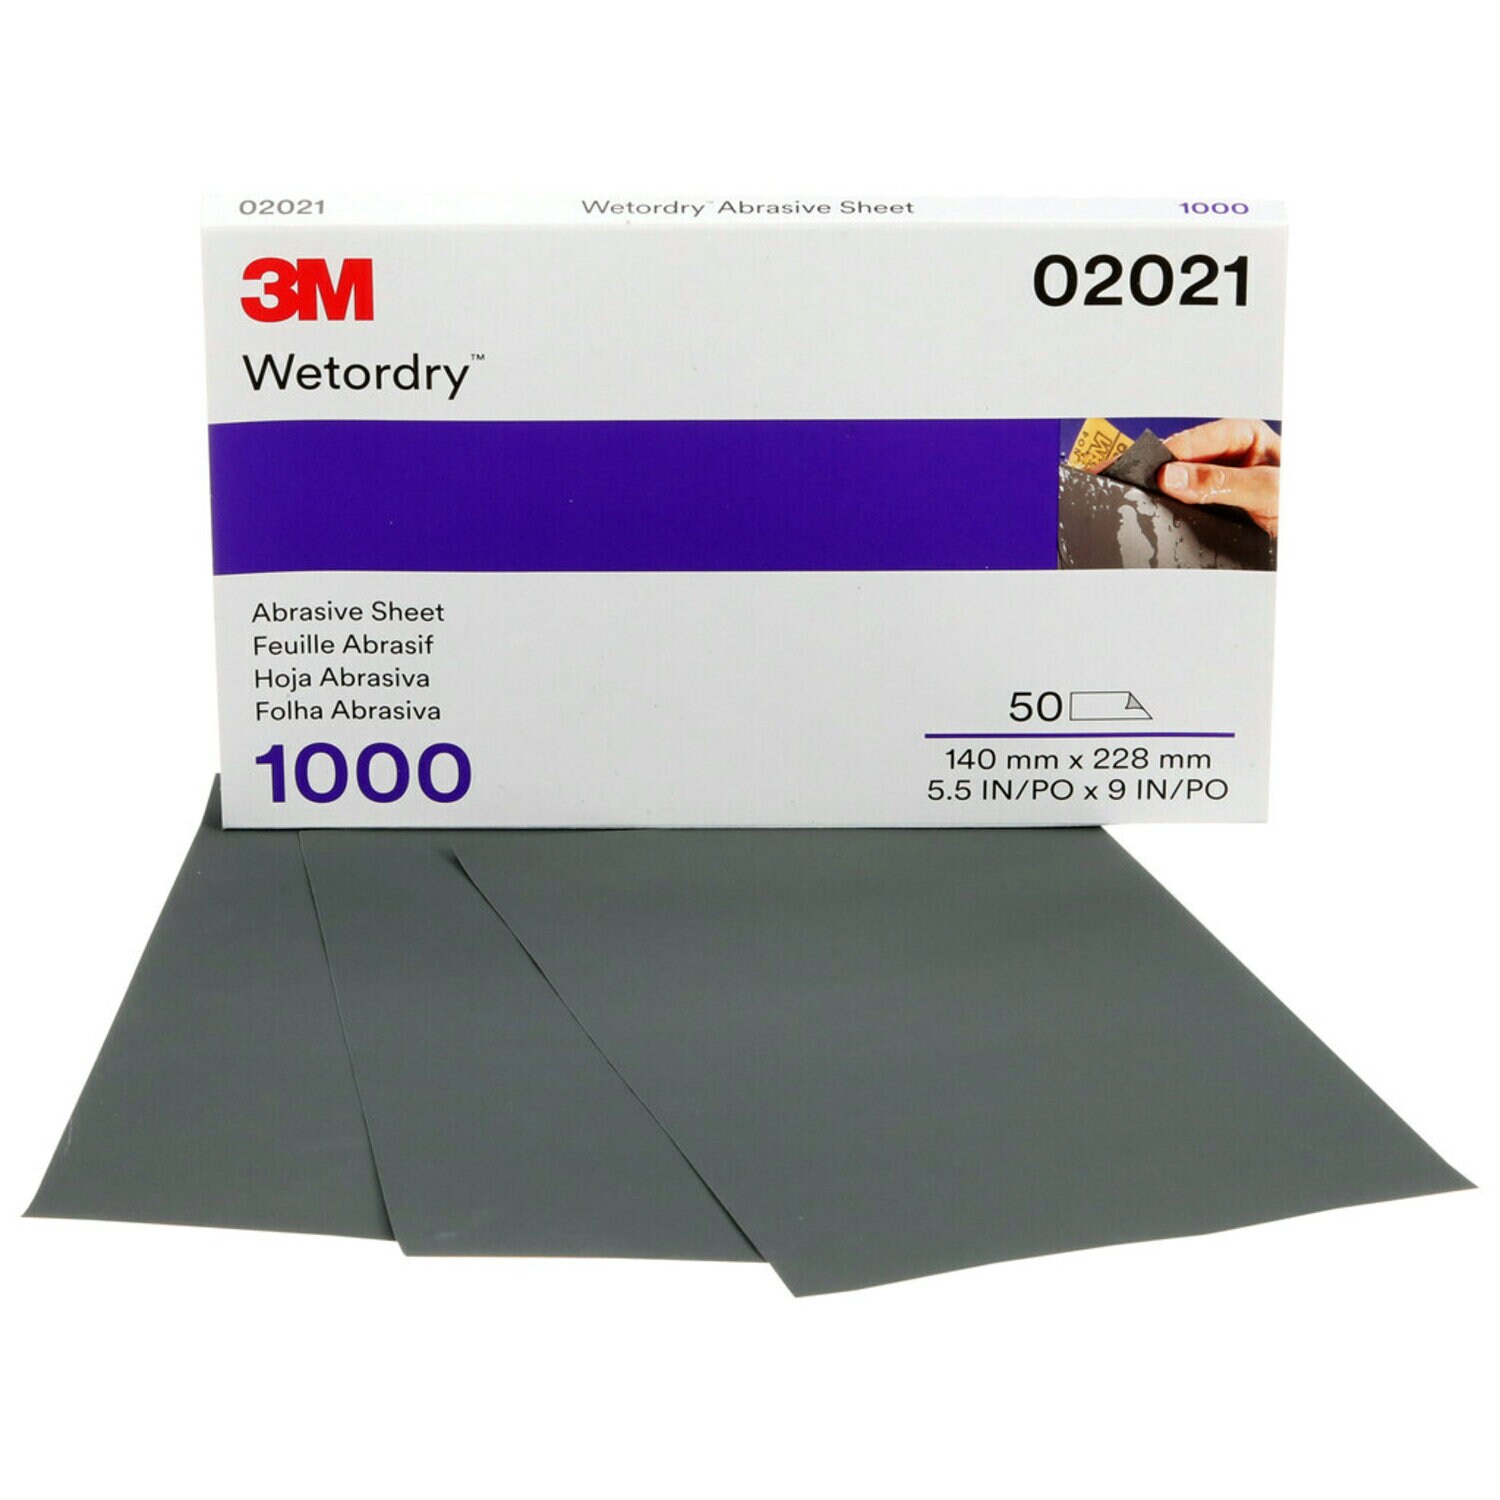 7000042501 - 3M Wetordry Abrasive Sheet 401Q, 02021, 1000, 5 1/2 in x 9 in, 50
sheets per carton, 5 cartons per case